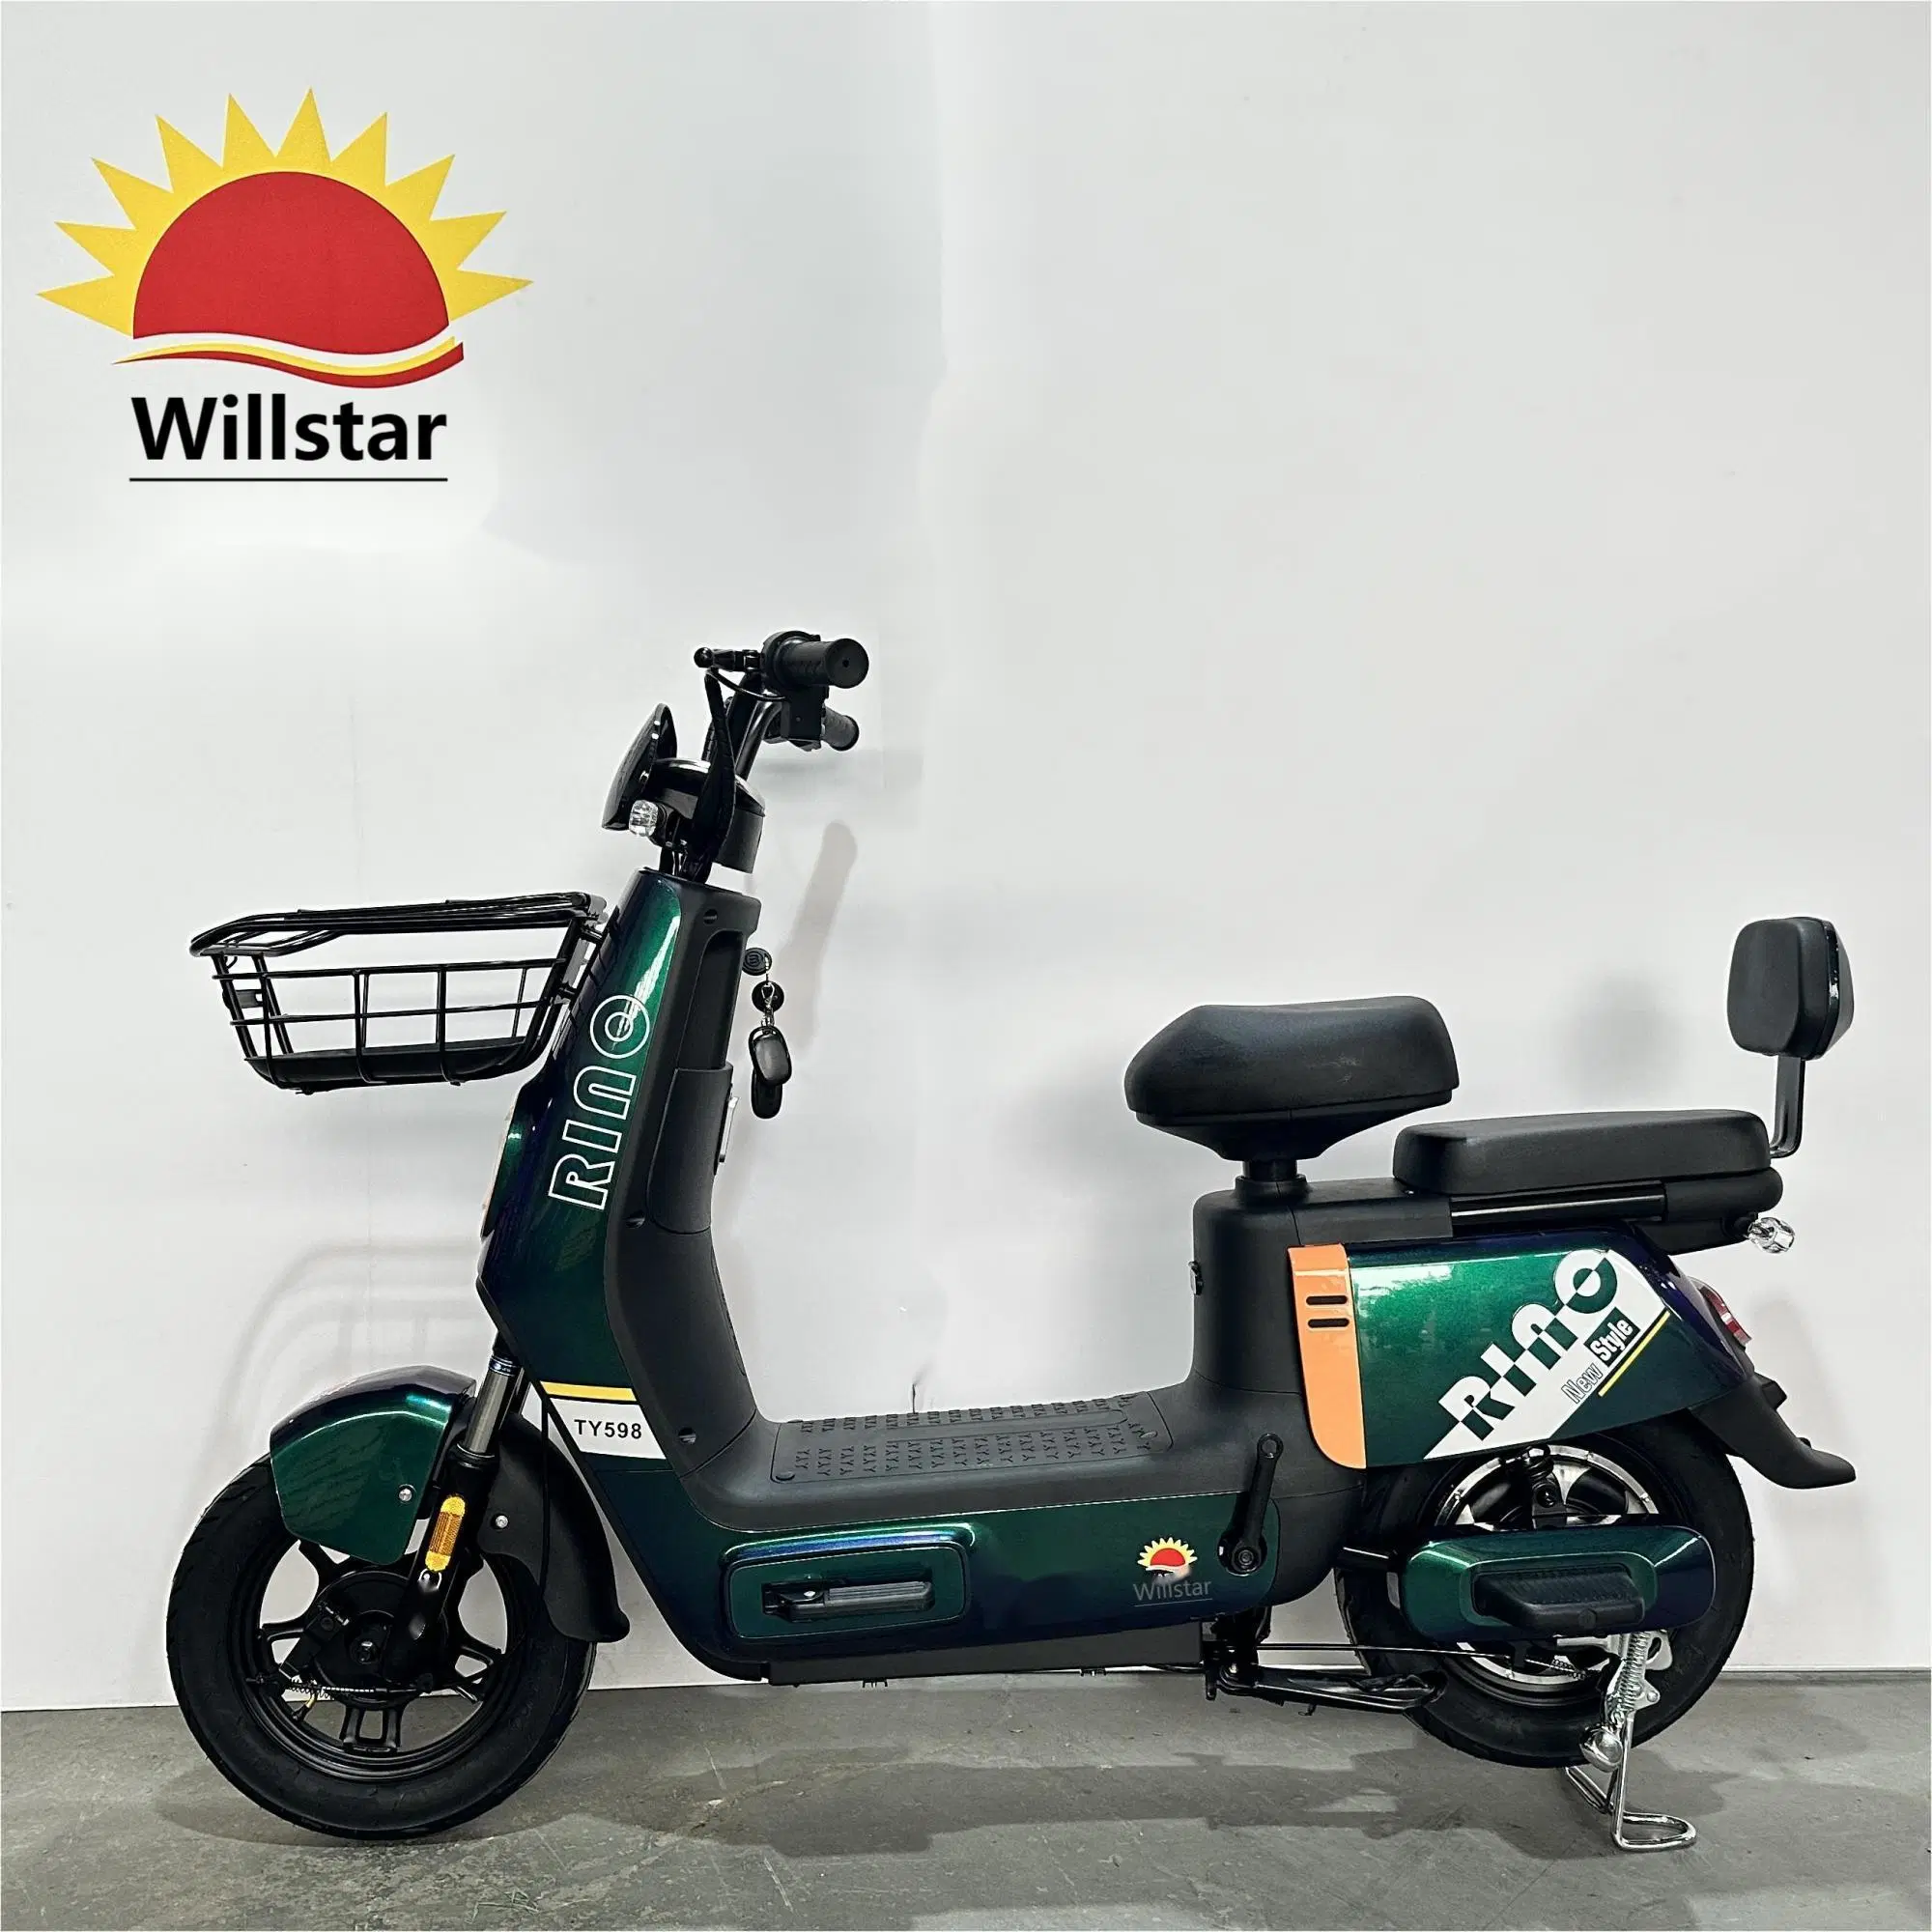 Willstar Electric Bike Ty598 com bateria de chumbo-ácido Chilwee ou Tianneng 48V12ah modelo mais recente